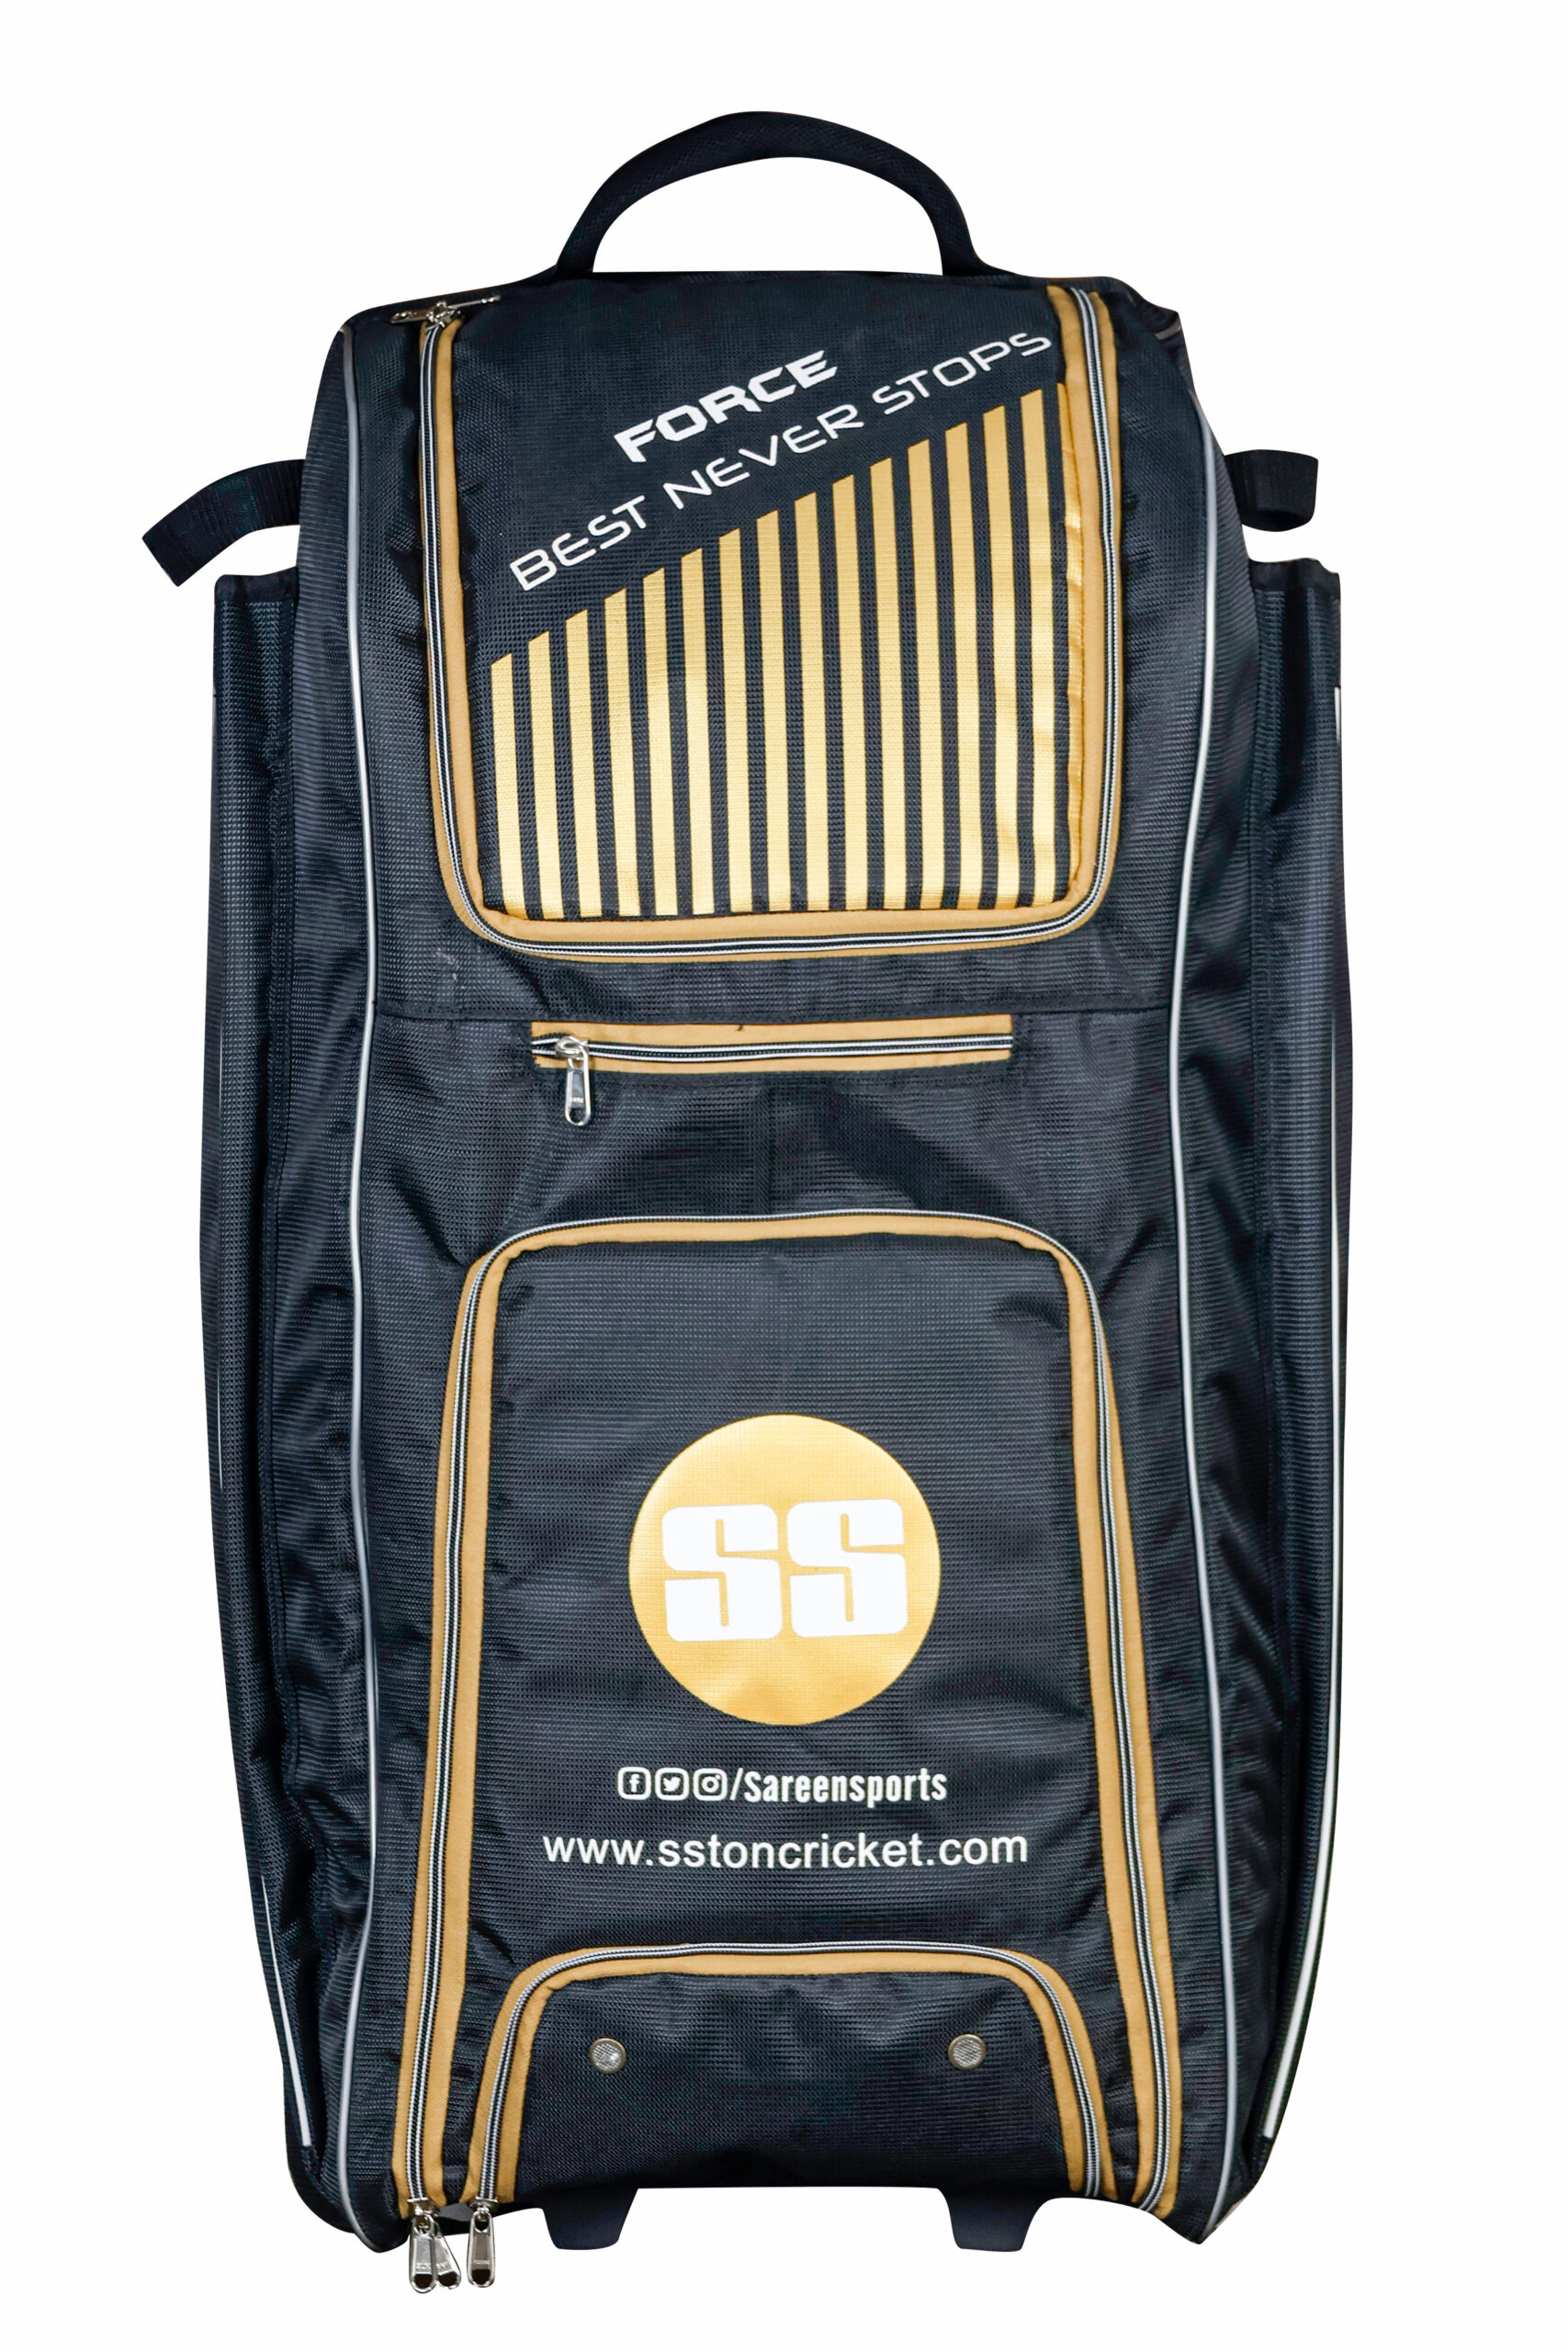 SS Cricket Kit Bag - Sports Equipment - 1744961592